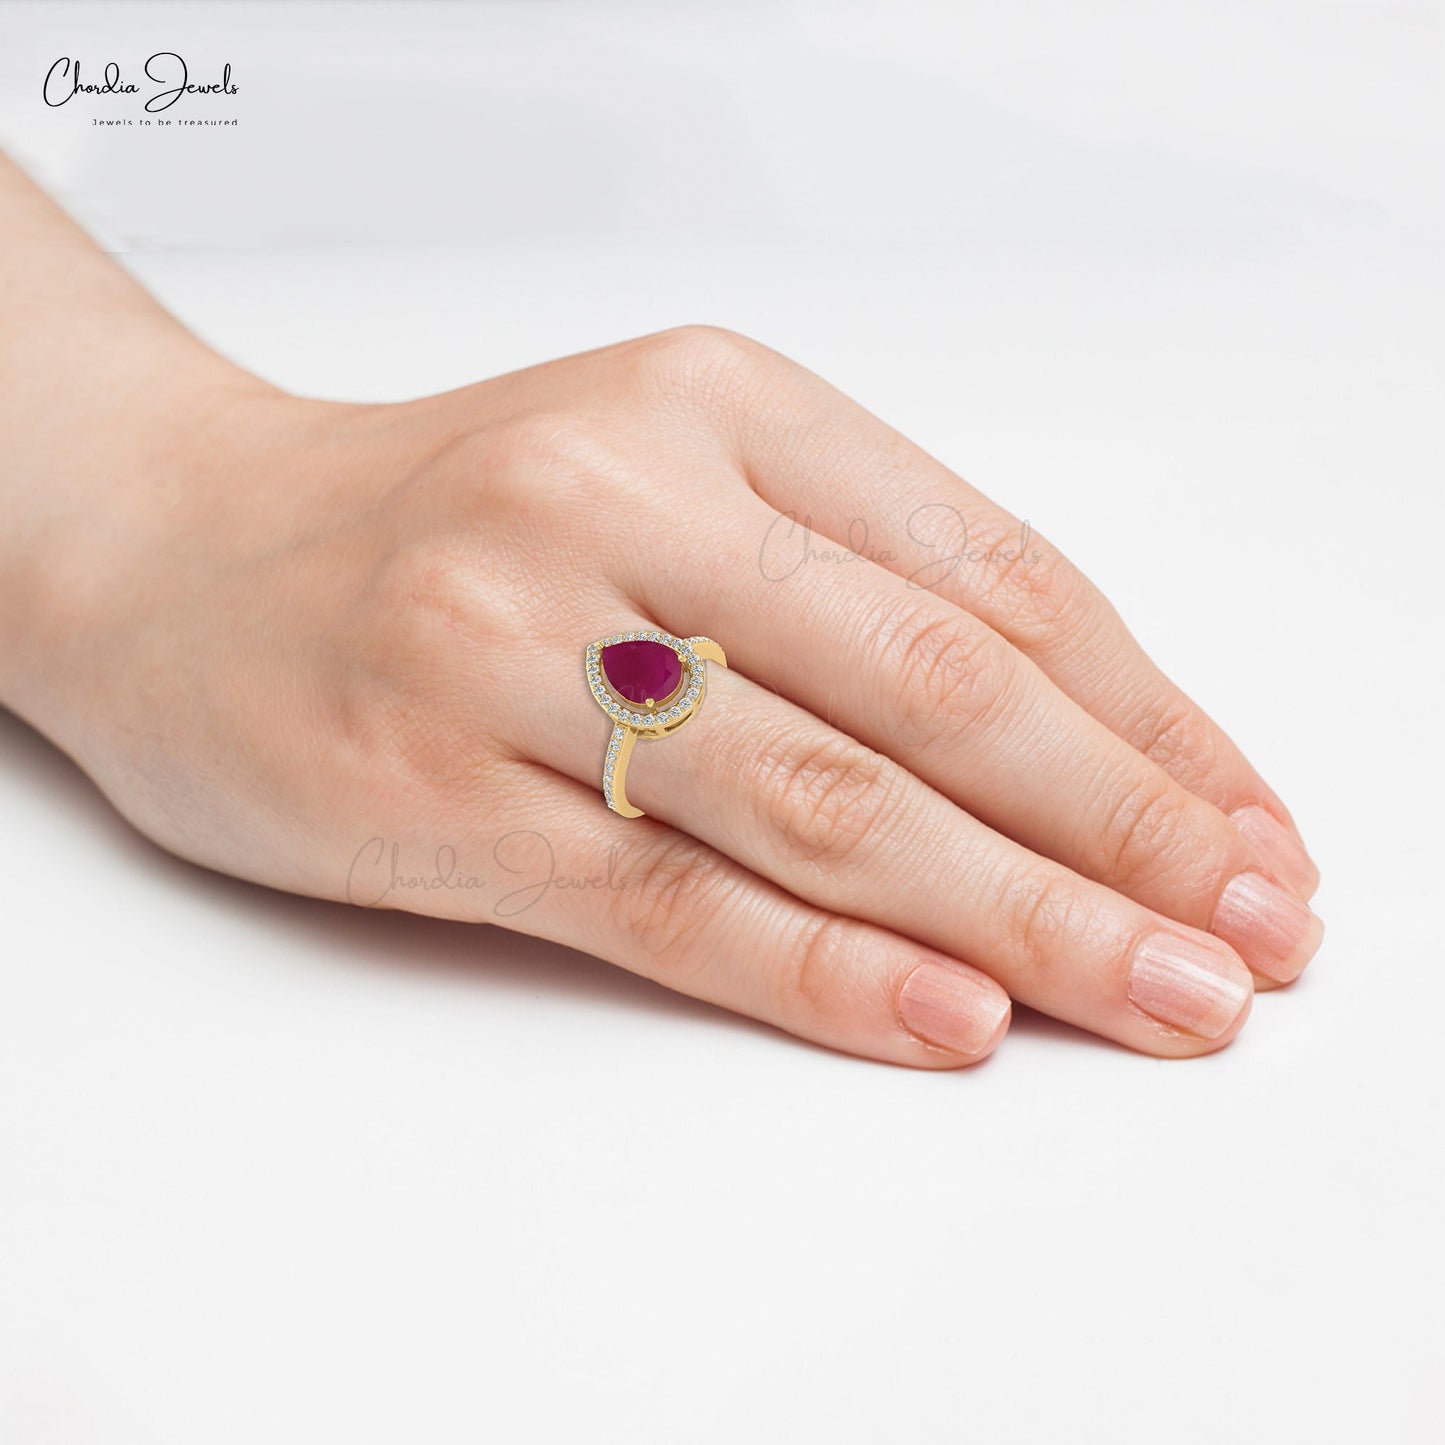 8X6MM Pear Cut Ruby Halo Diamond Engagement Ring